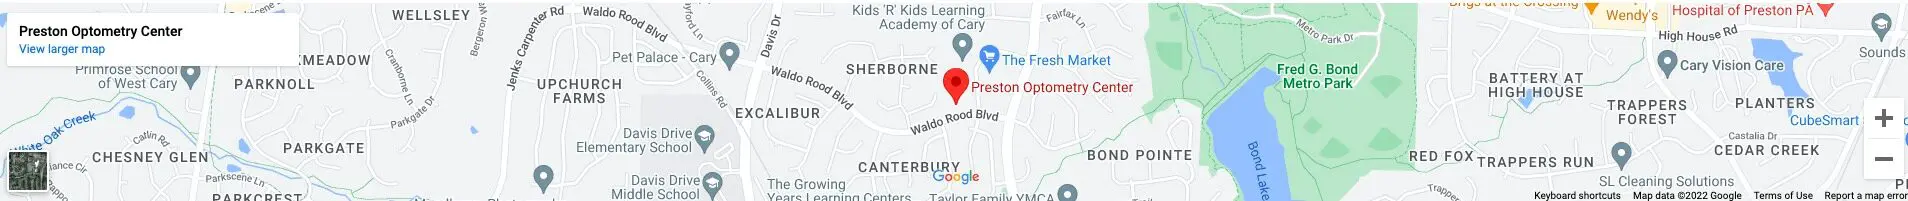 Preston Optometry Center